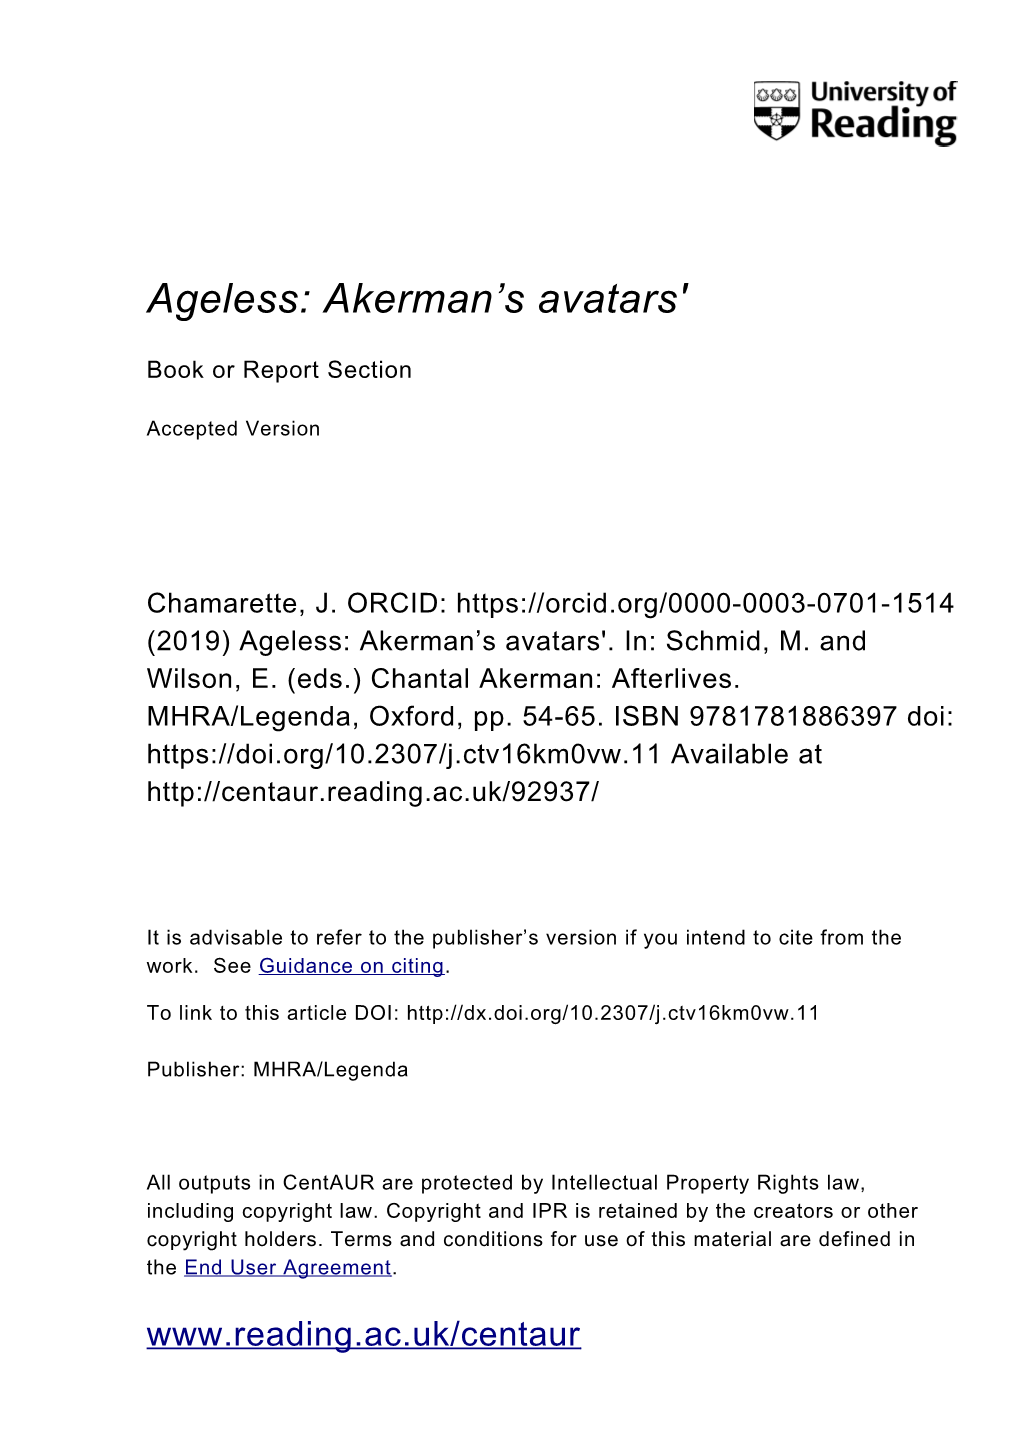 Ageless-Akerman's Avatars Jenny Chamarette Accepted Version